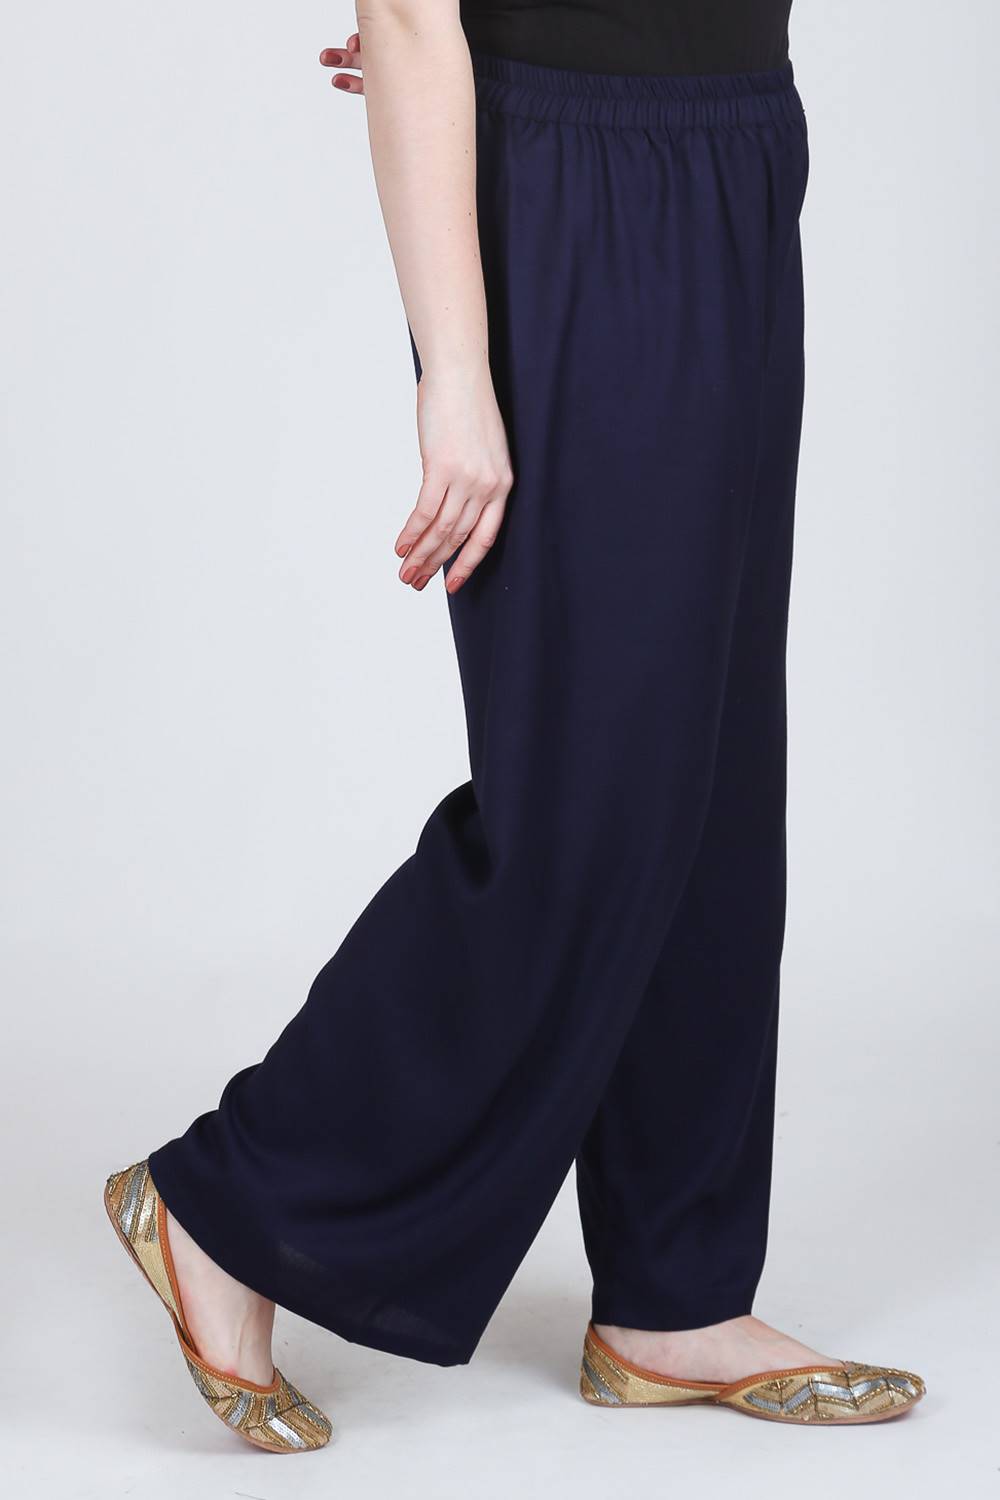 Buy Navy Blue Trousers  Pants for Women by SHEREEN Online  Ajiocom